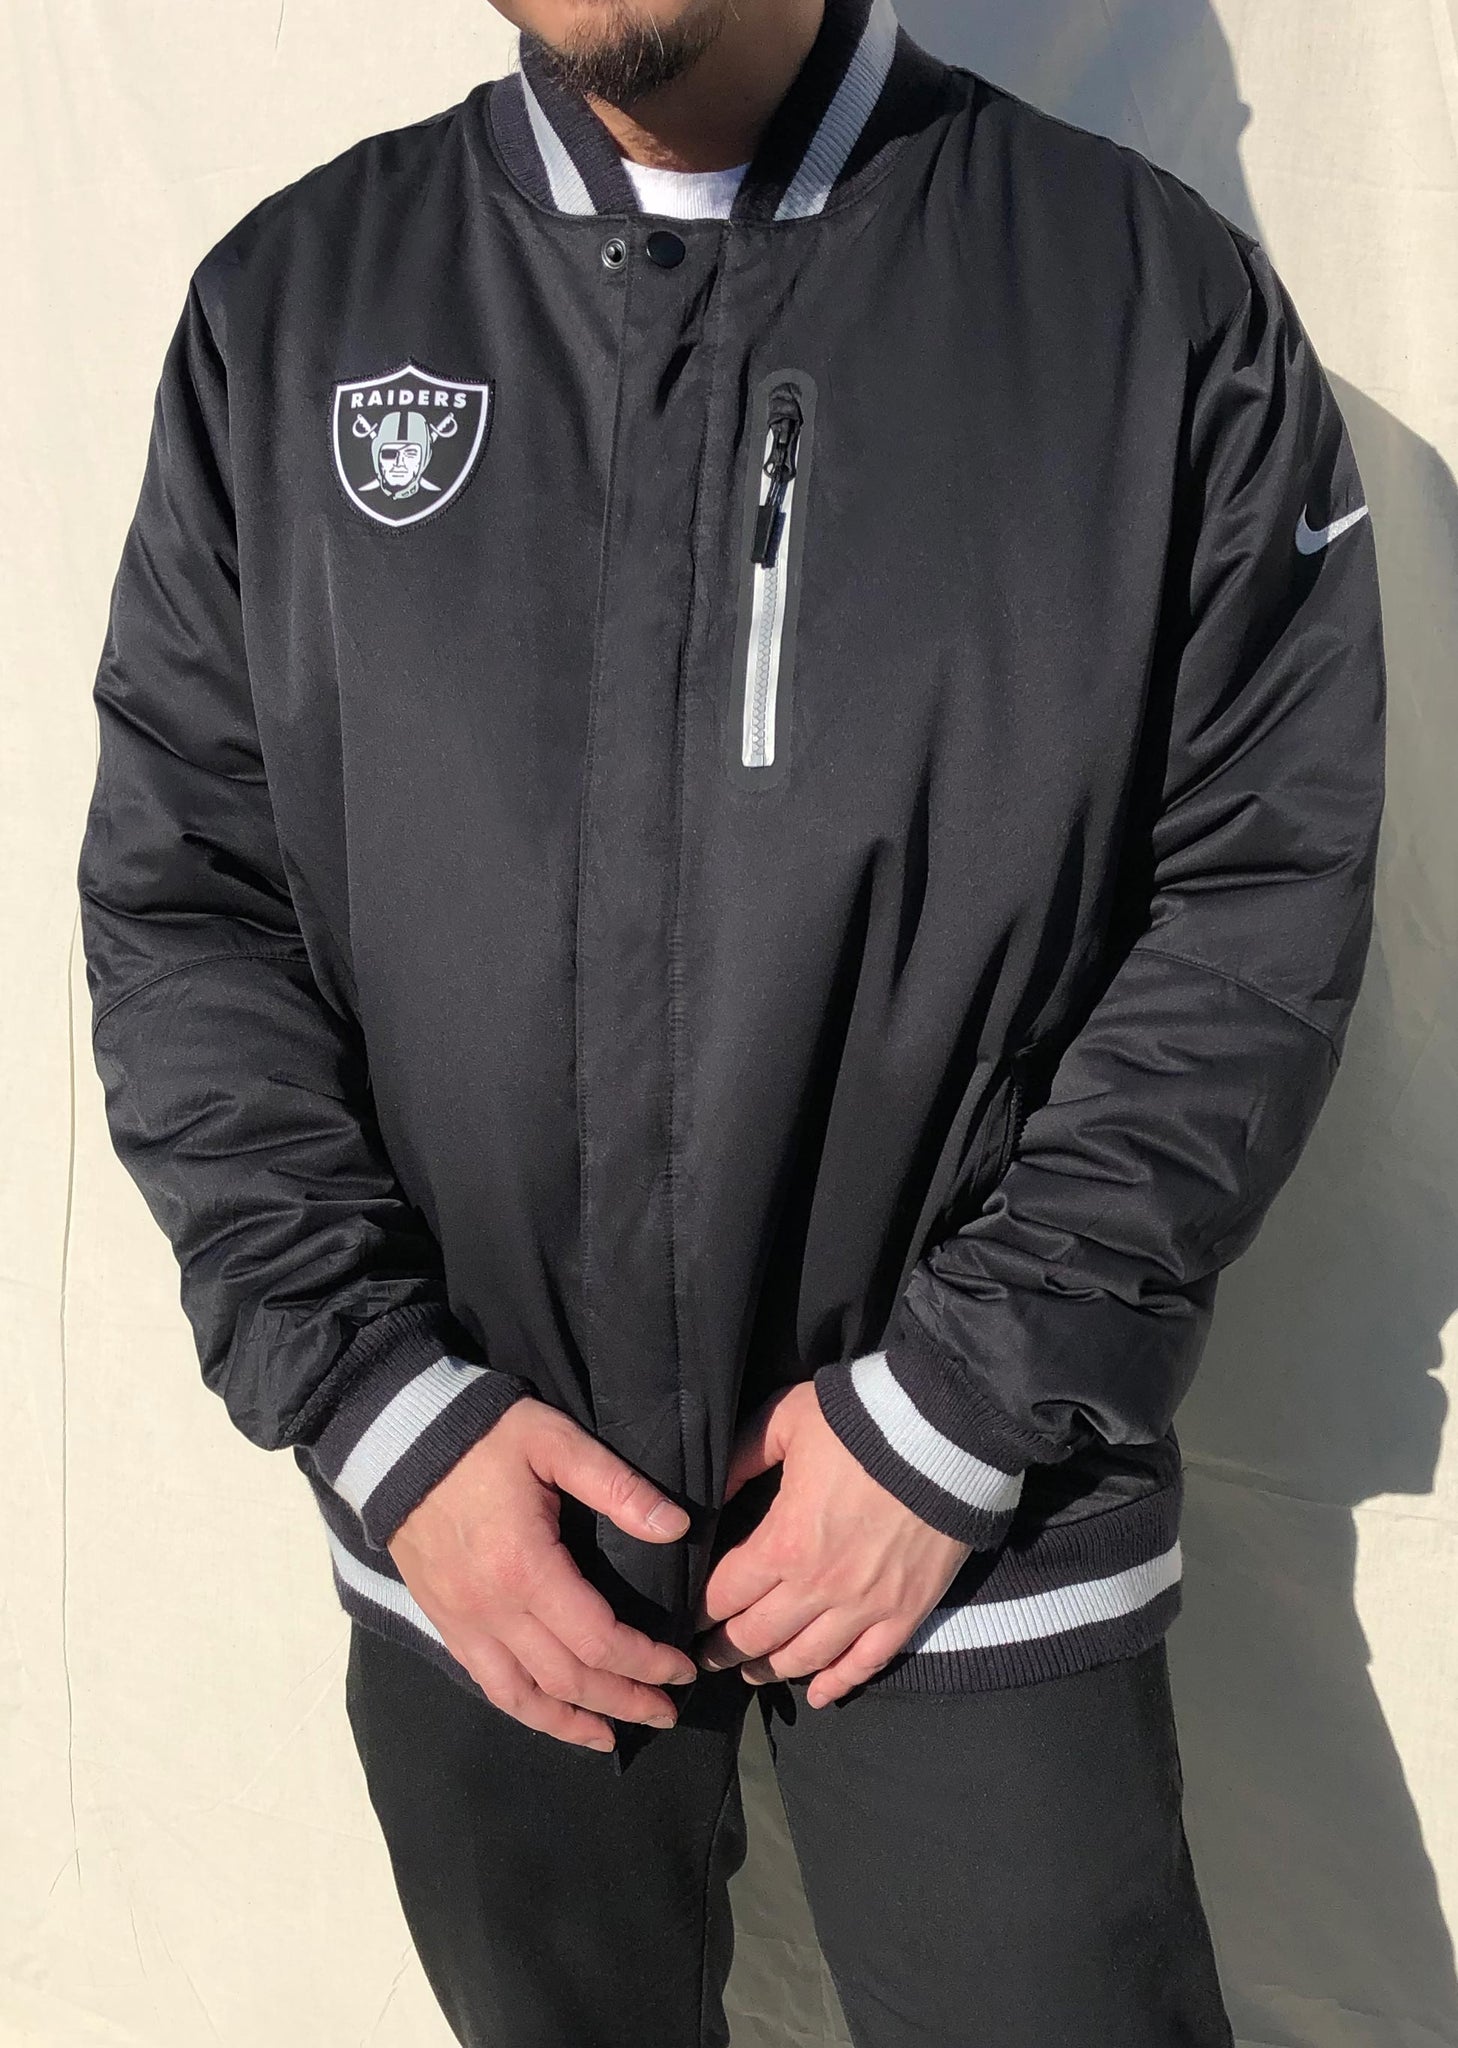 NFL Raiders x Reversible Jacket Black/Silver – Chop Suey Official